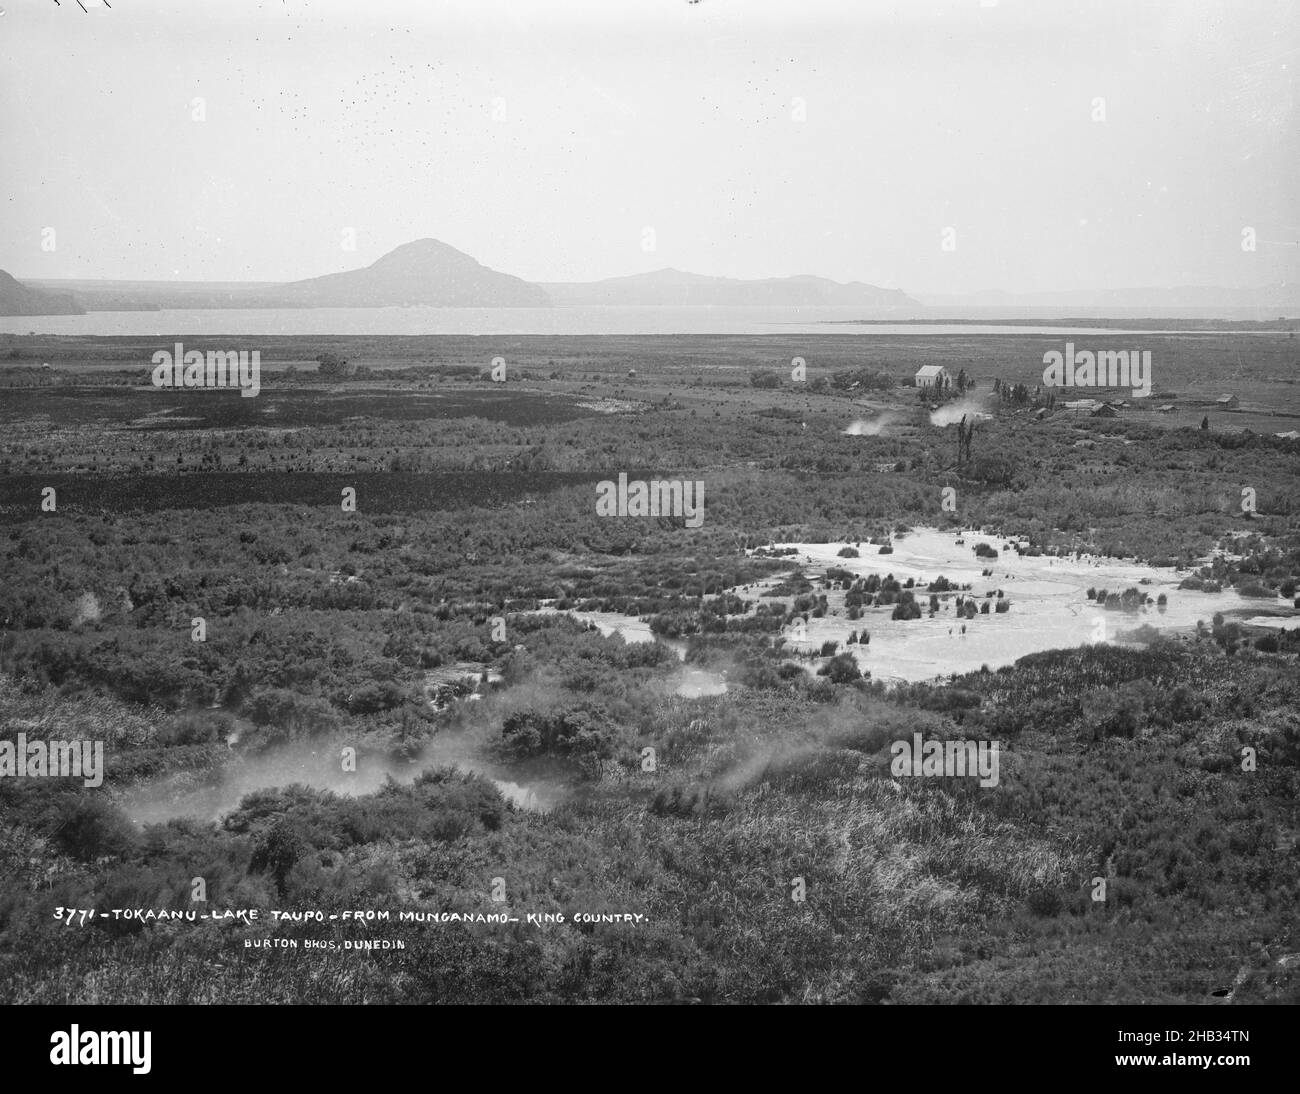 Tokaanu, Lake Taupo, from Munganamo, King Country, Burton Brothers studio, photography studio, New Zealand, black-and-white photography Stock Photo